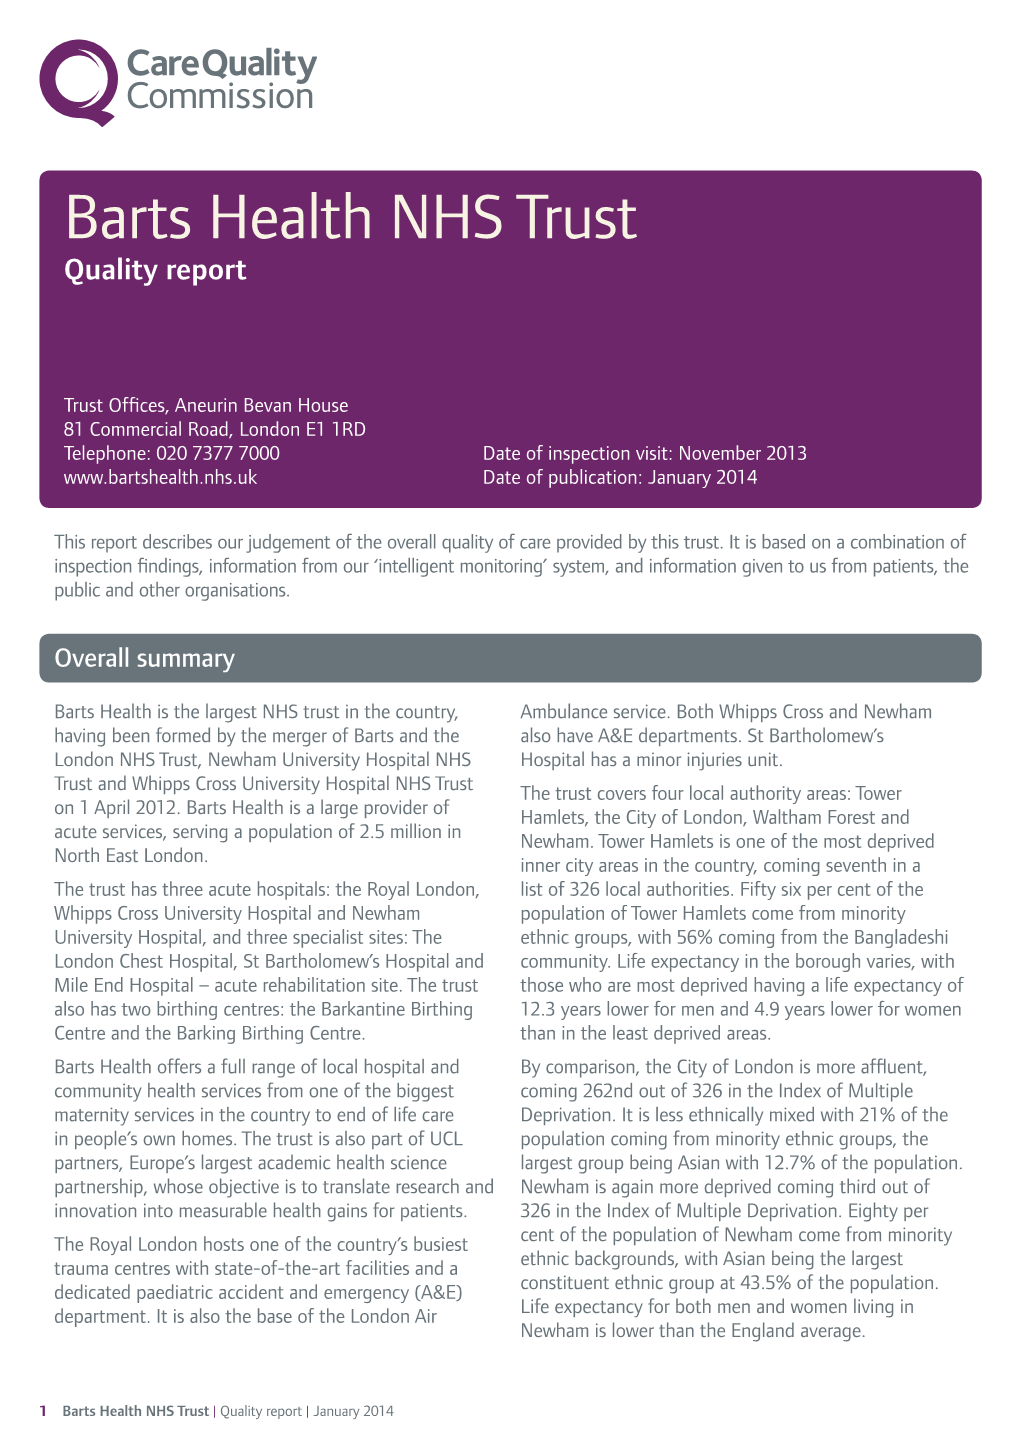 Barts Health NHS Trust Quality Report